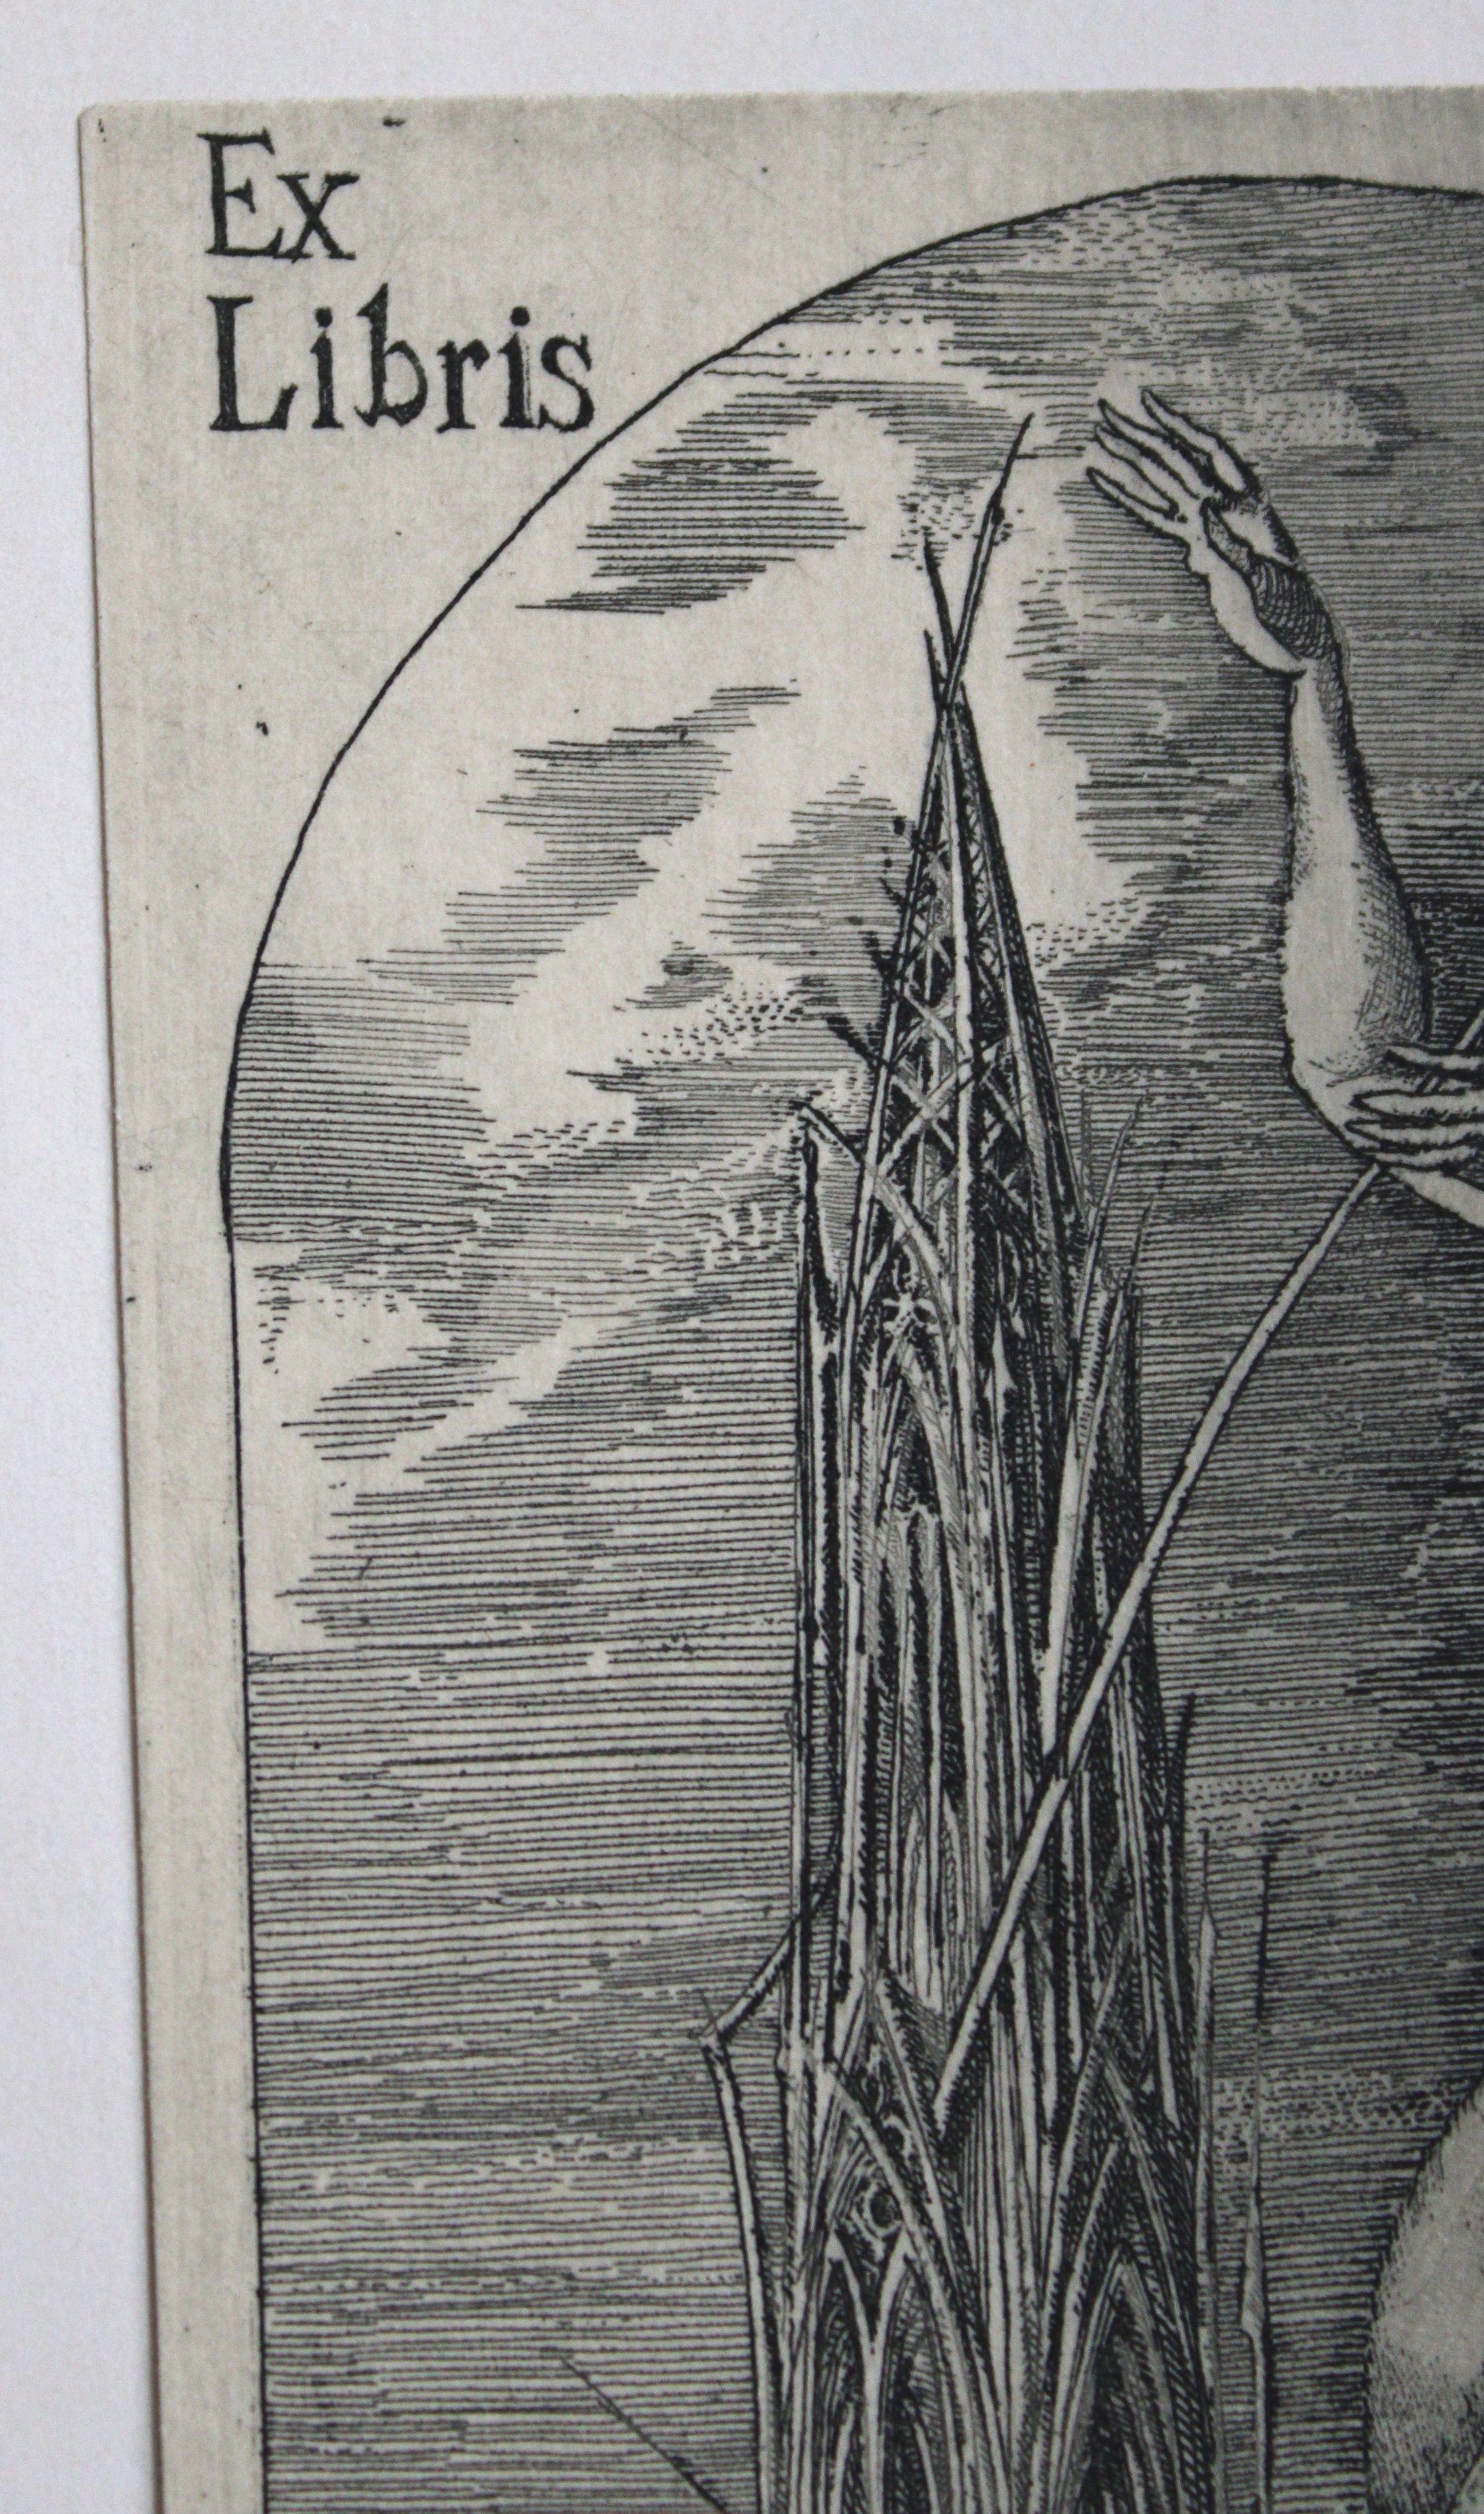 Ex libris Olav Tähe

Papier, Holzschnitt, 11x7cm